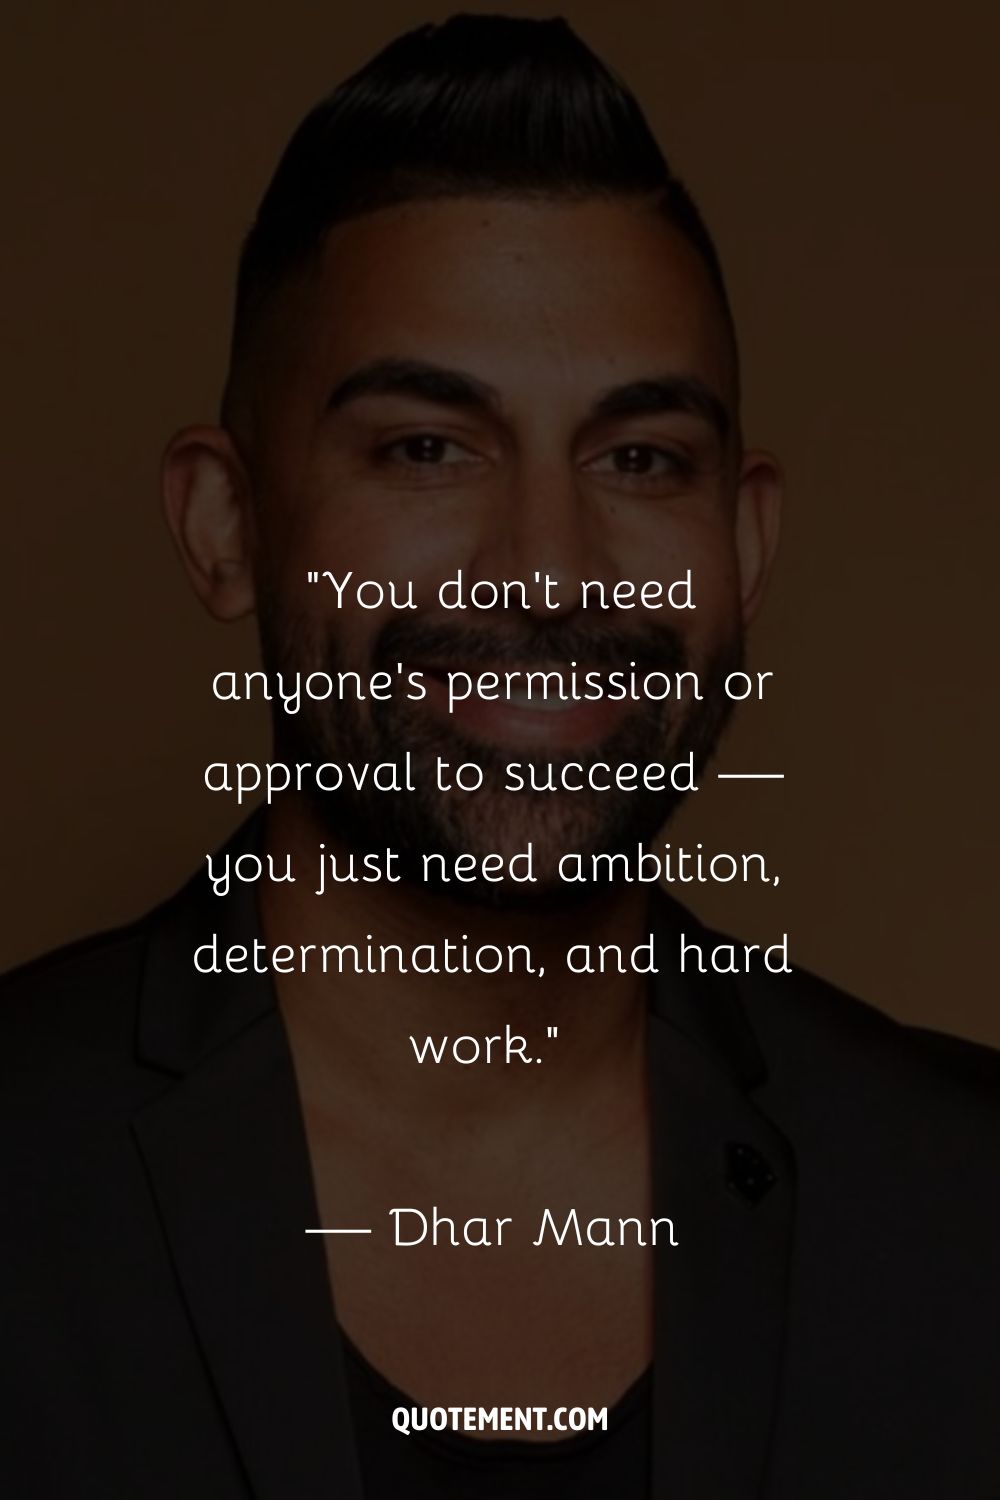 Dhar Mann exuding confidence in a black shirt
